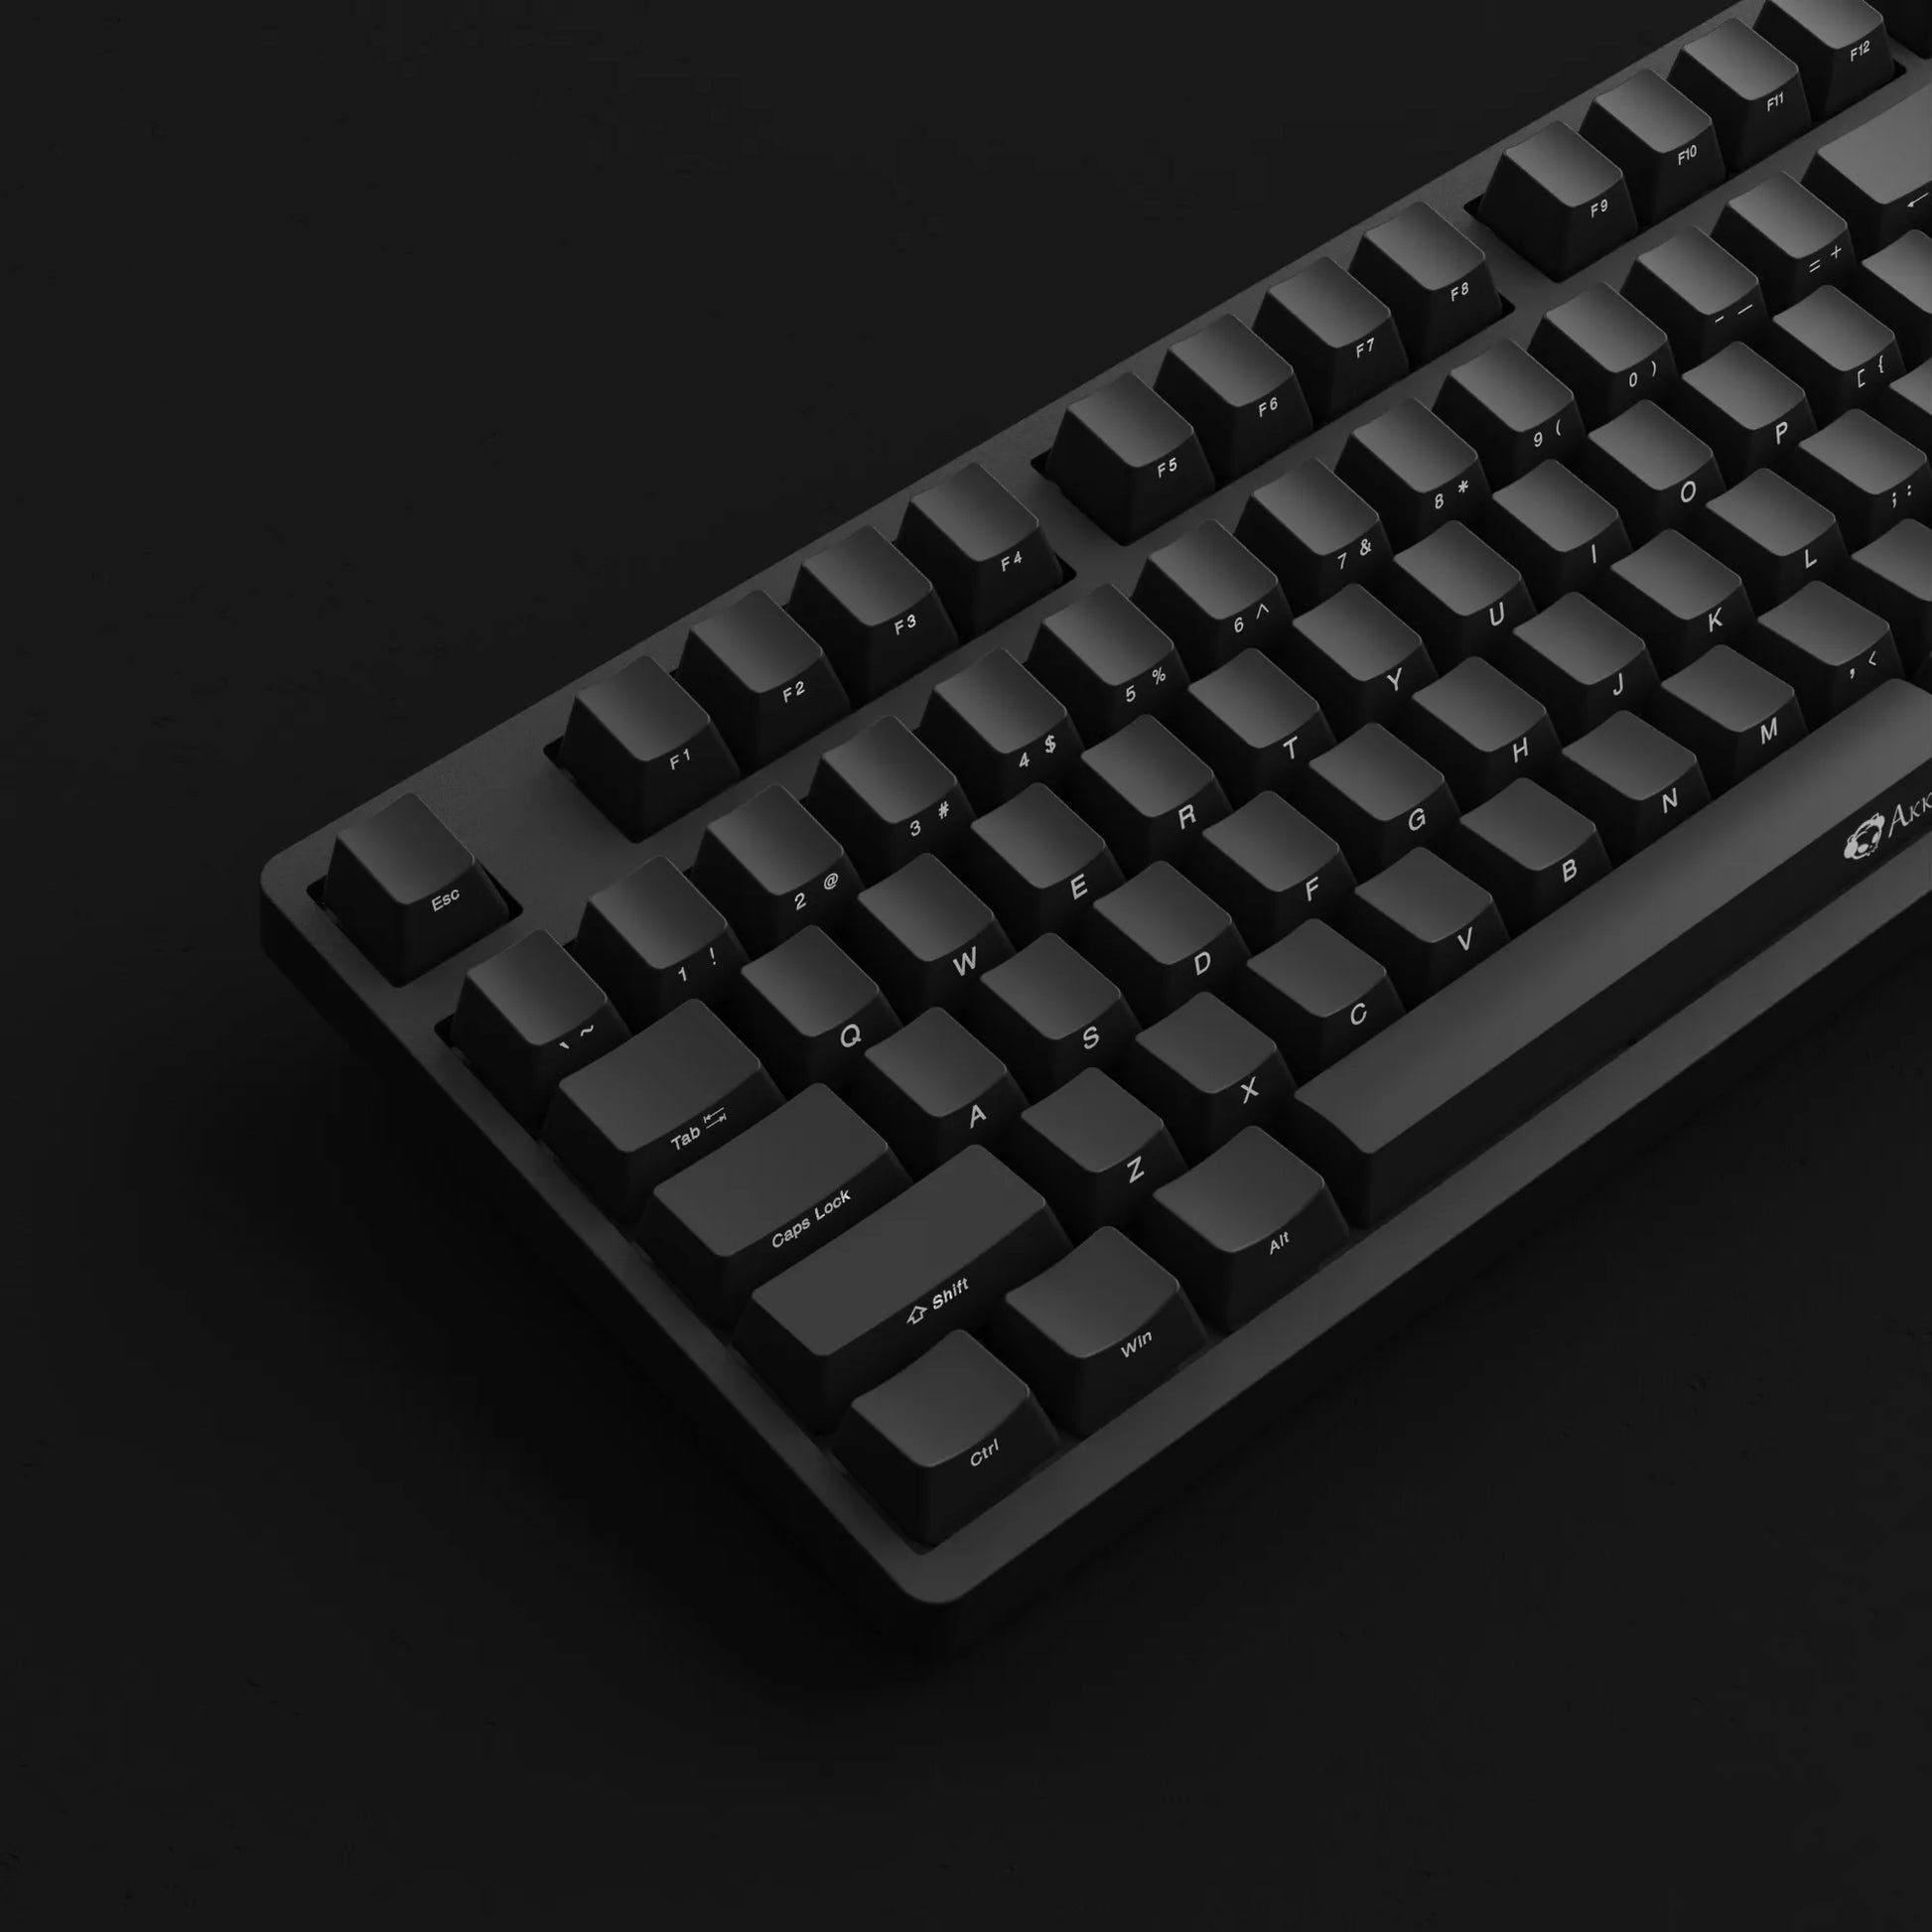 Akko Black SP 3087 v2 Mechanical Gaming Keyboard